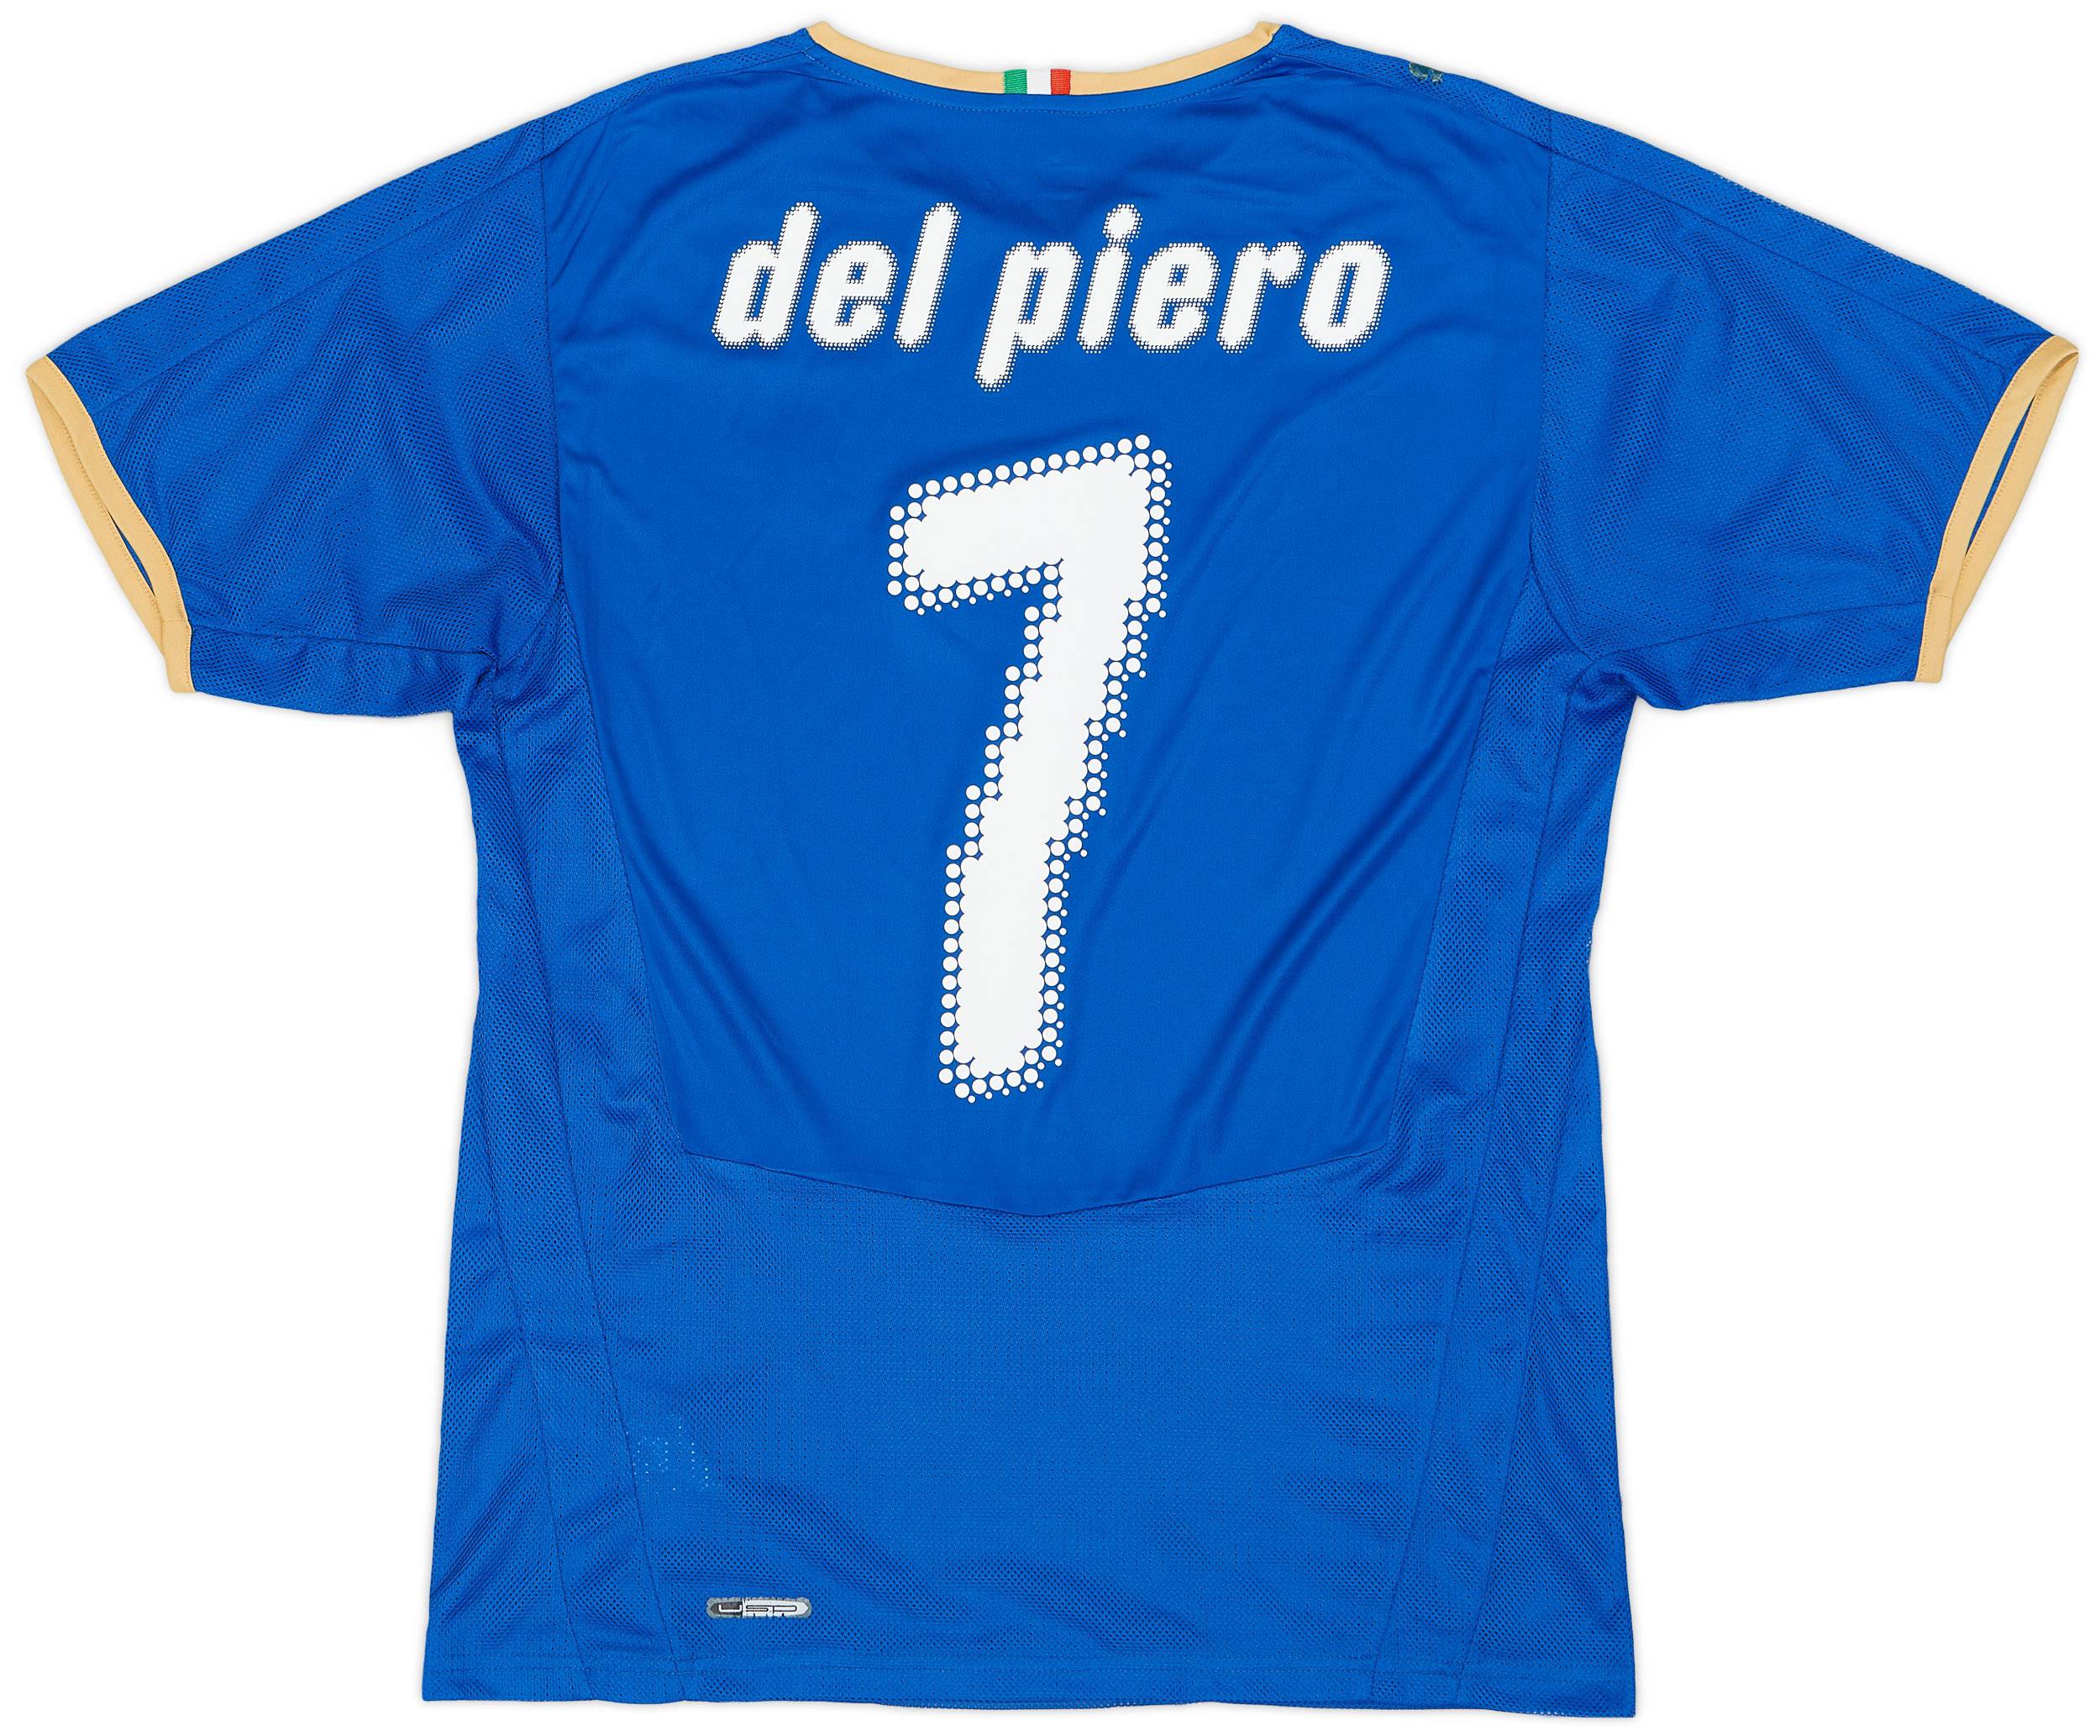 2007-08 Italy Home Shirt Del Piero #7 - Good 5/10 - (M)